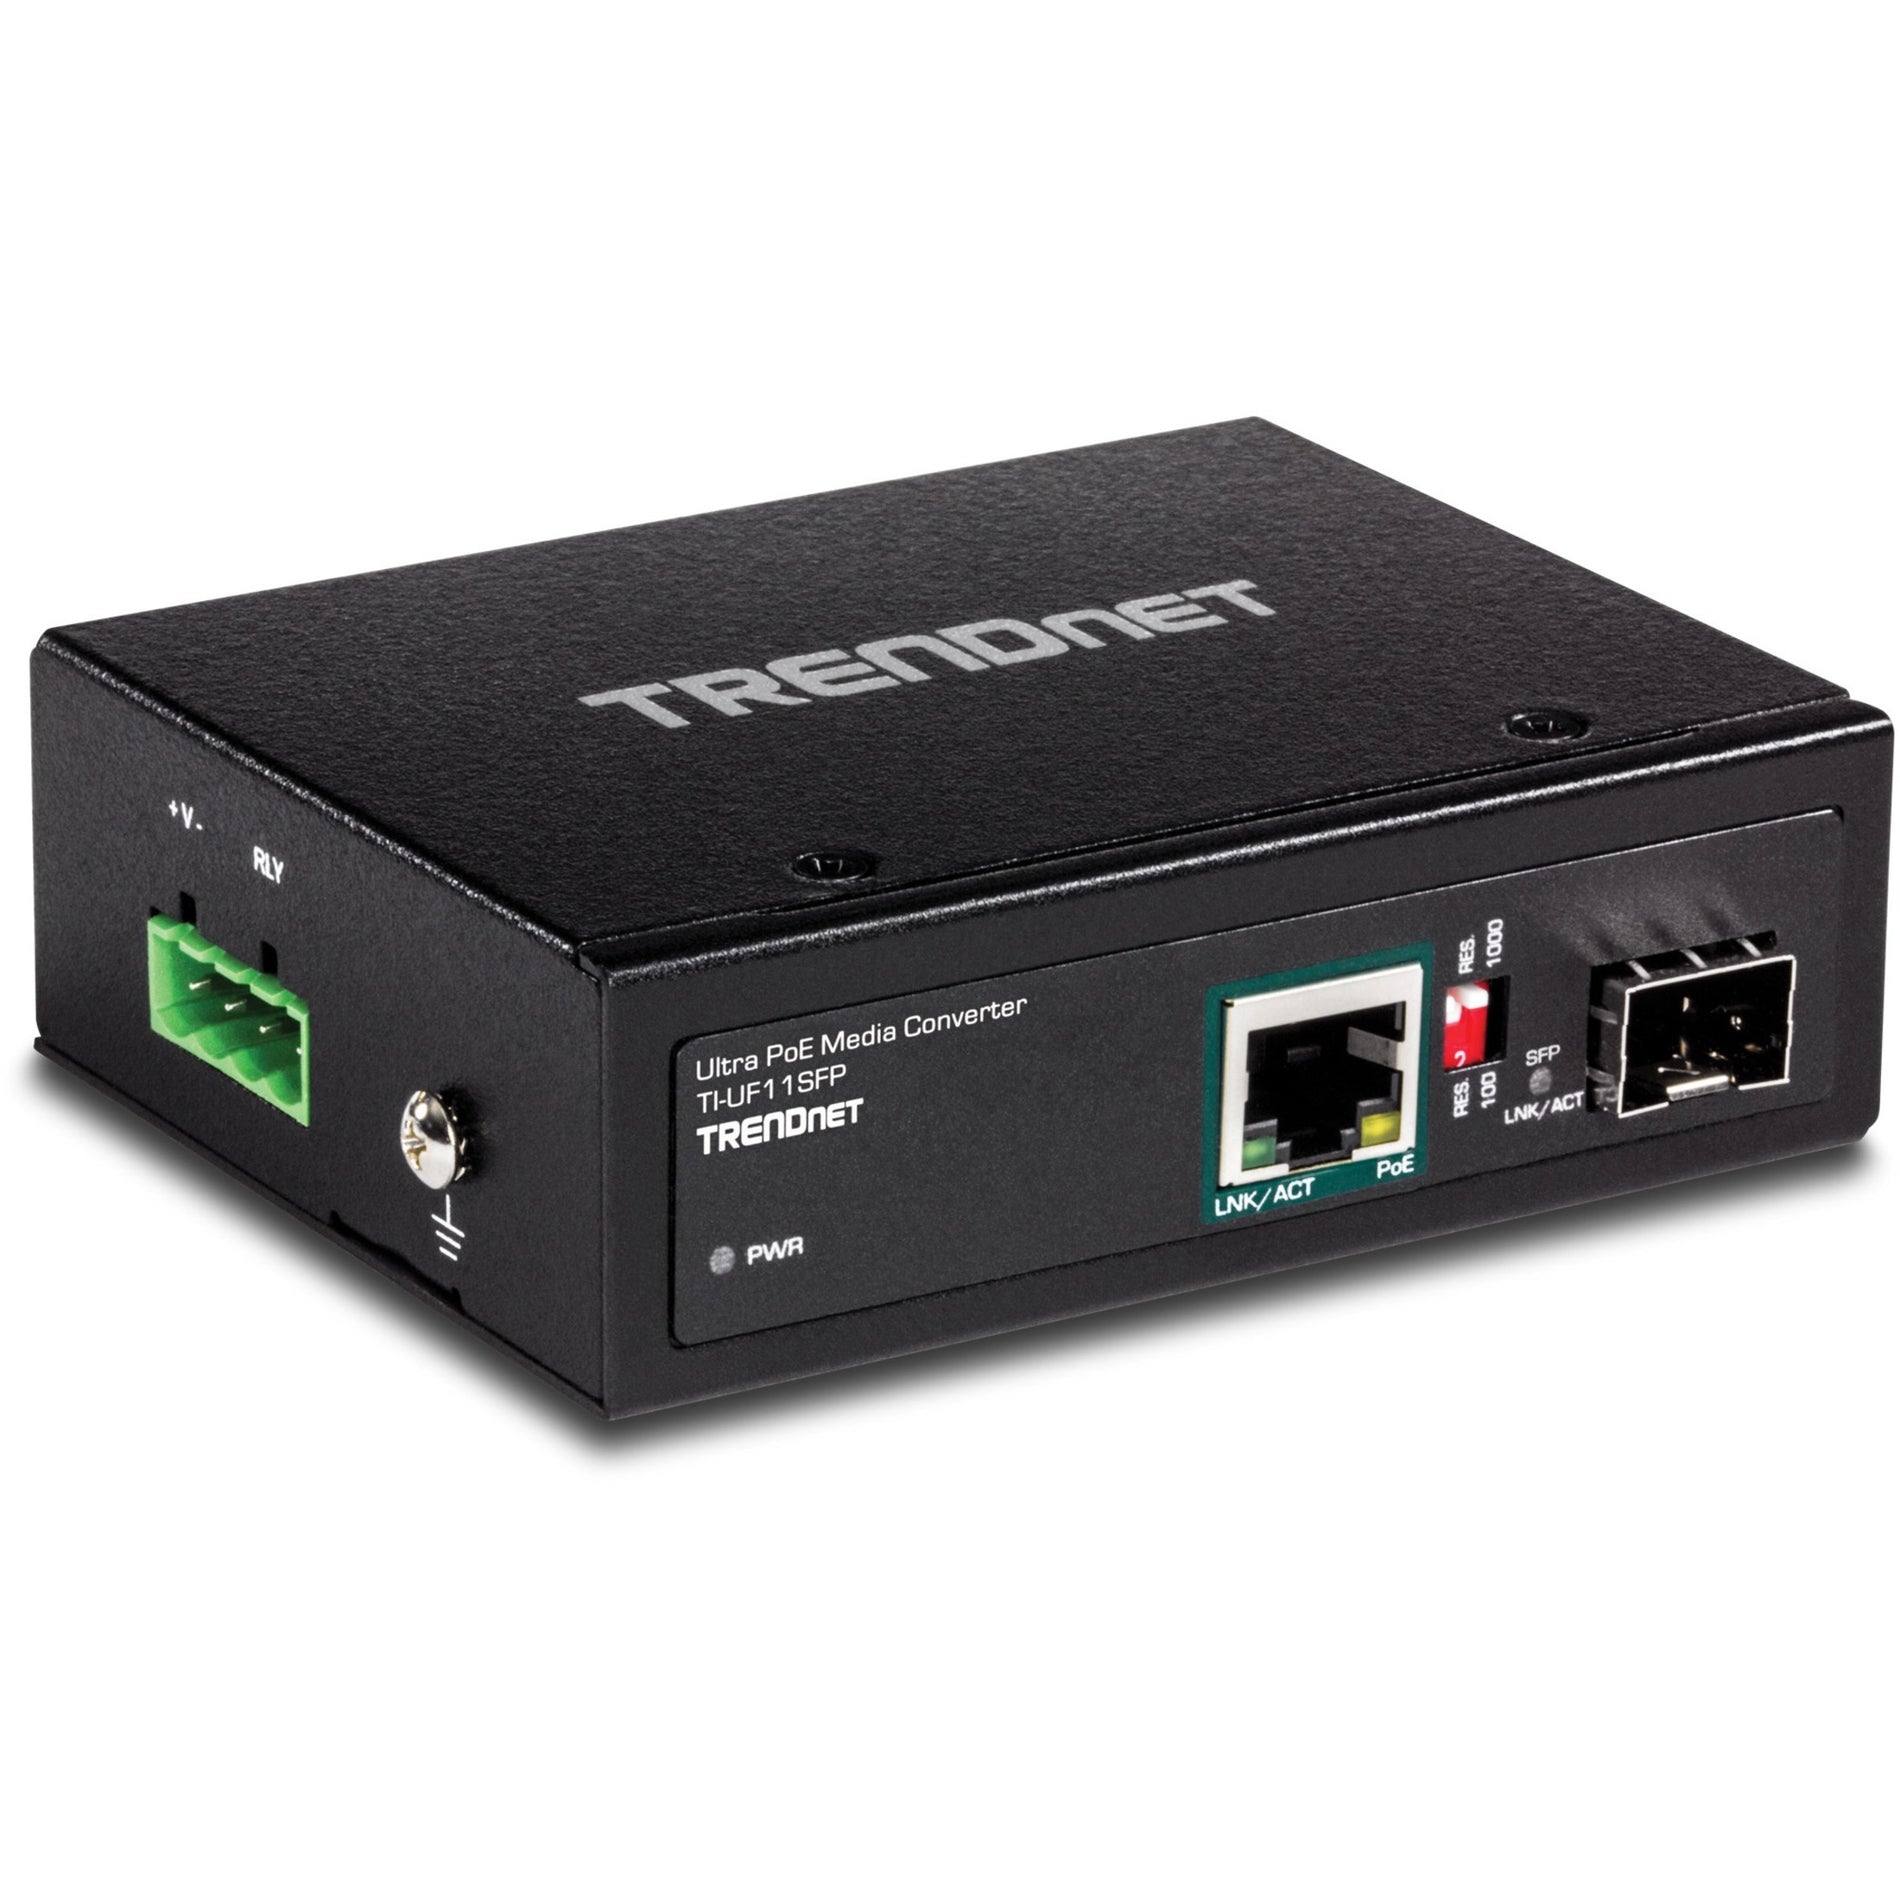 TRENDnet TI-UF11SFP Hardened Industrial SFP to Gigabit UPoE Media Converter